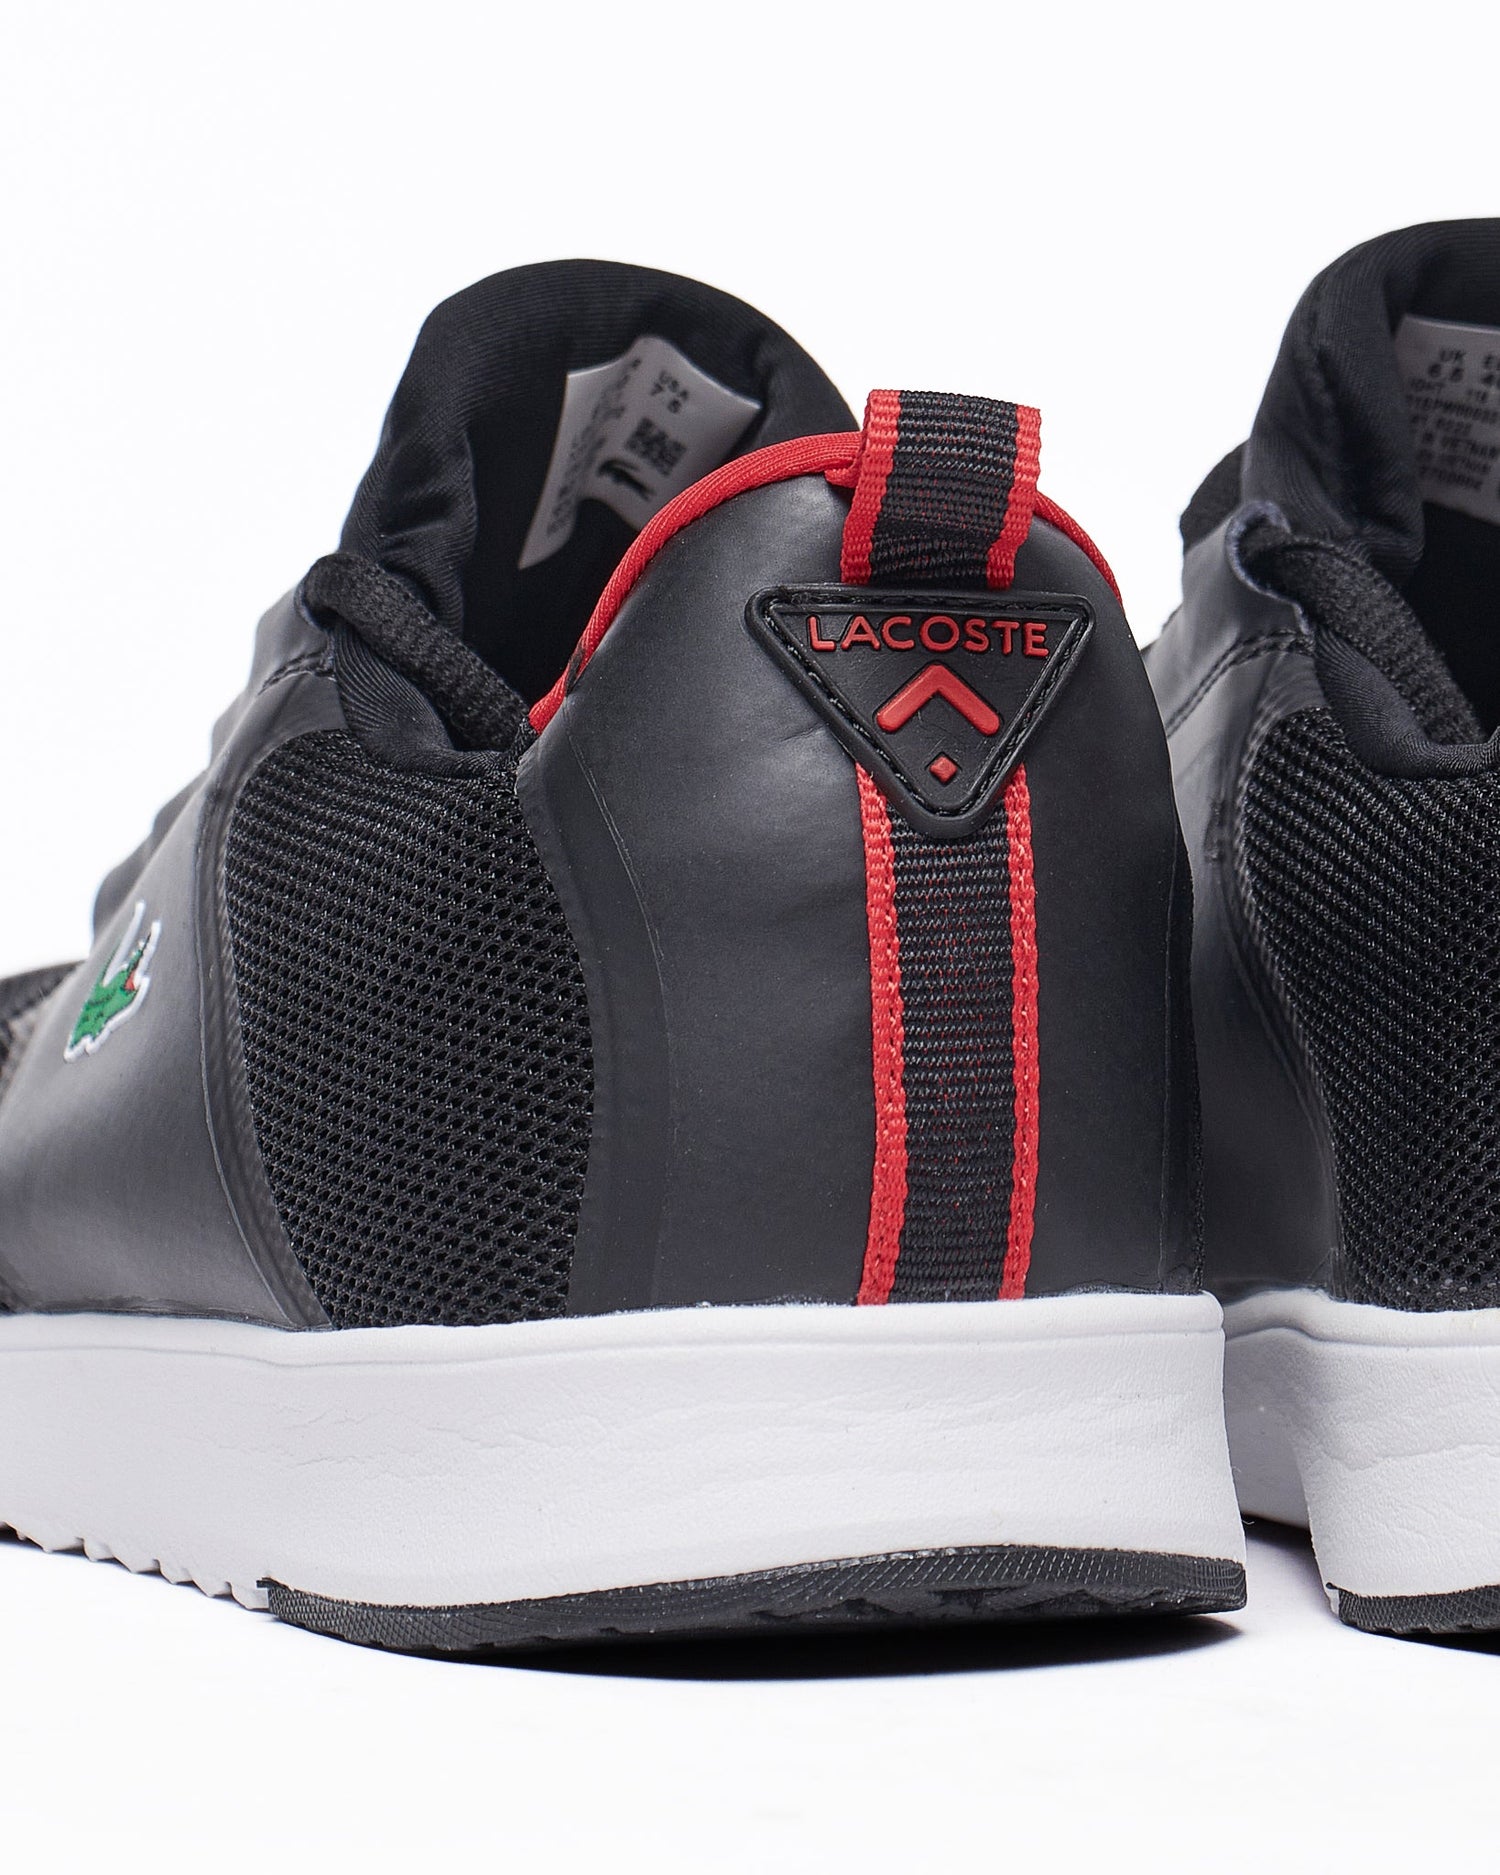 MOI OUTFIT-LAC Leather Color Contrast Men Black Sneakers Shoes 32.90